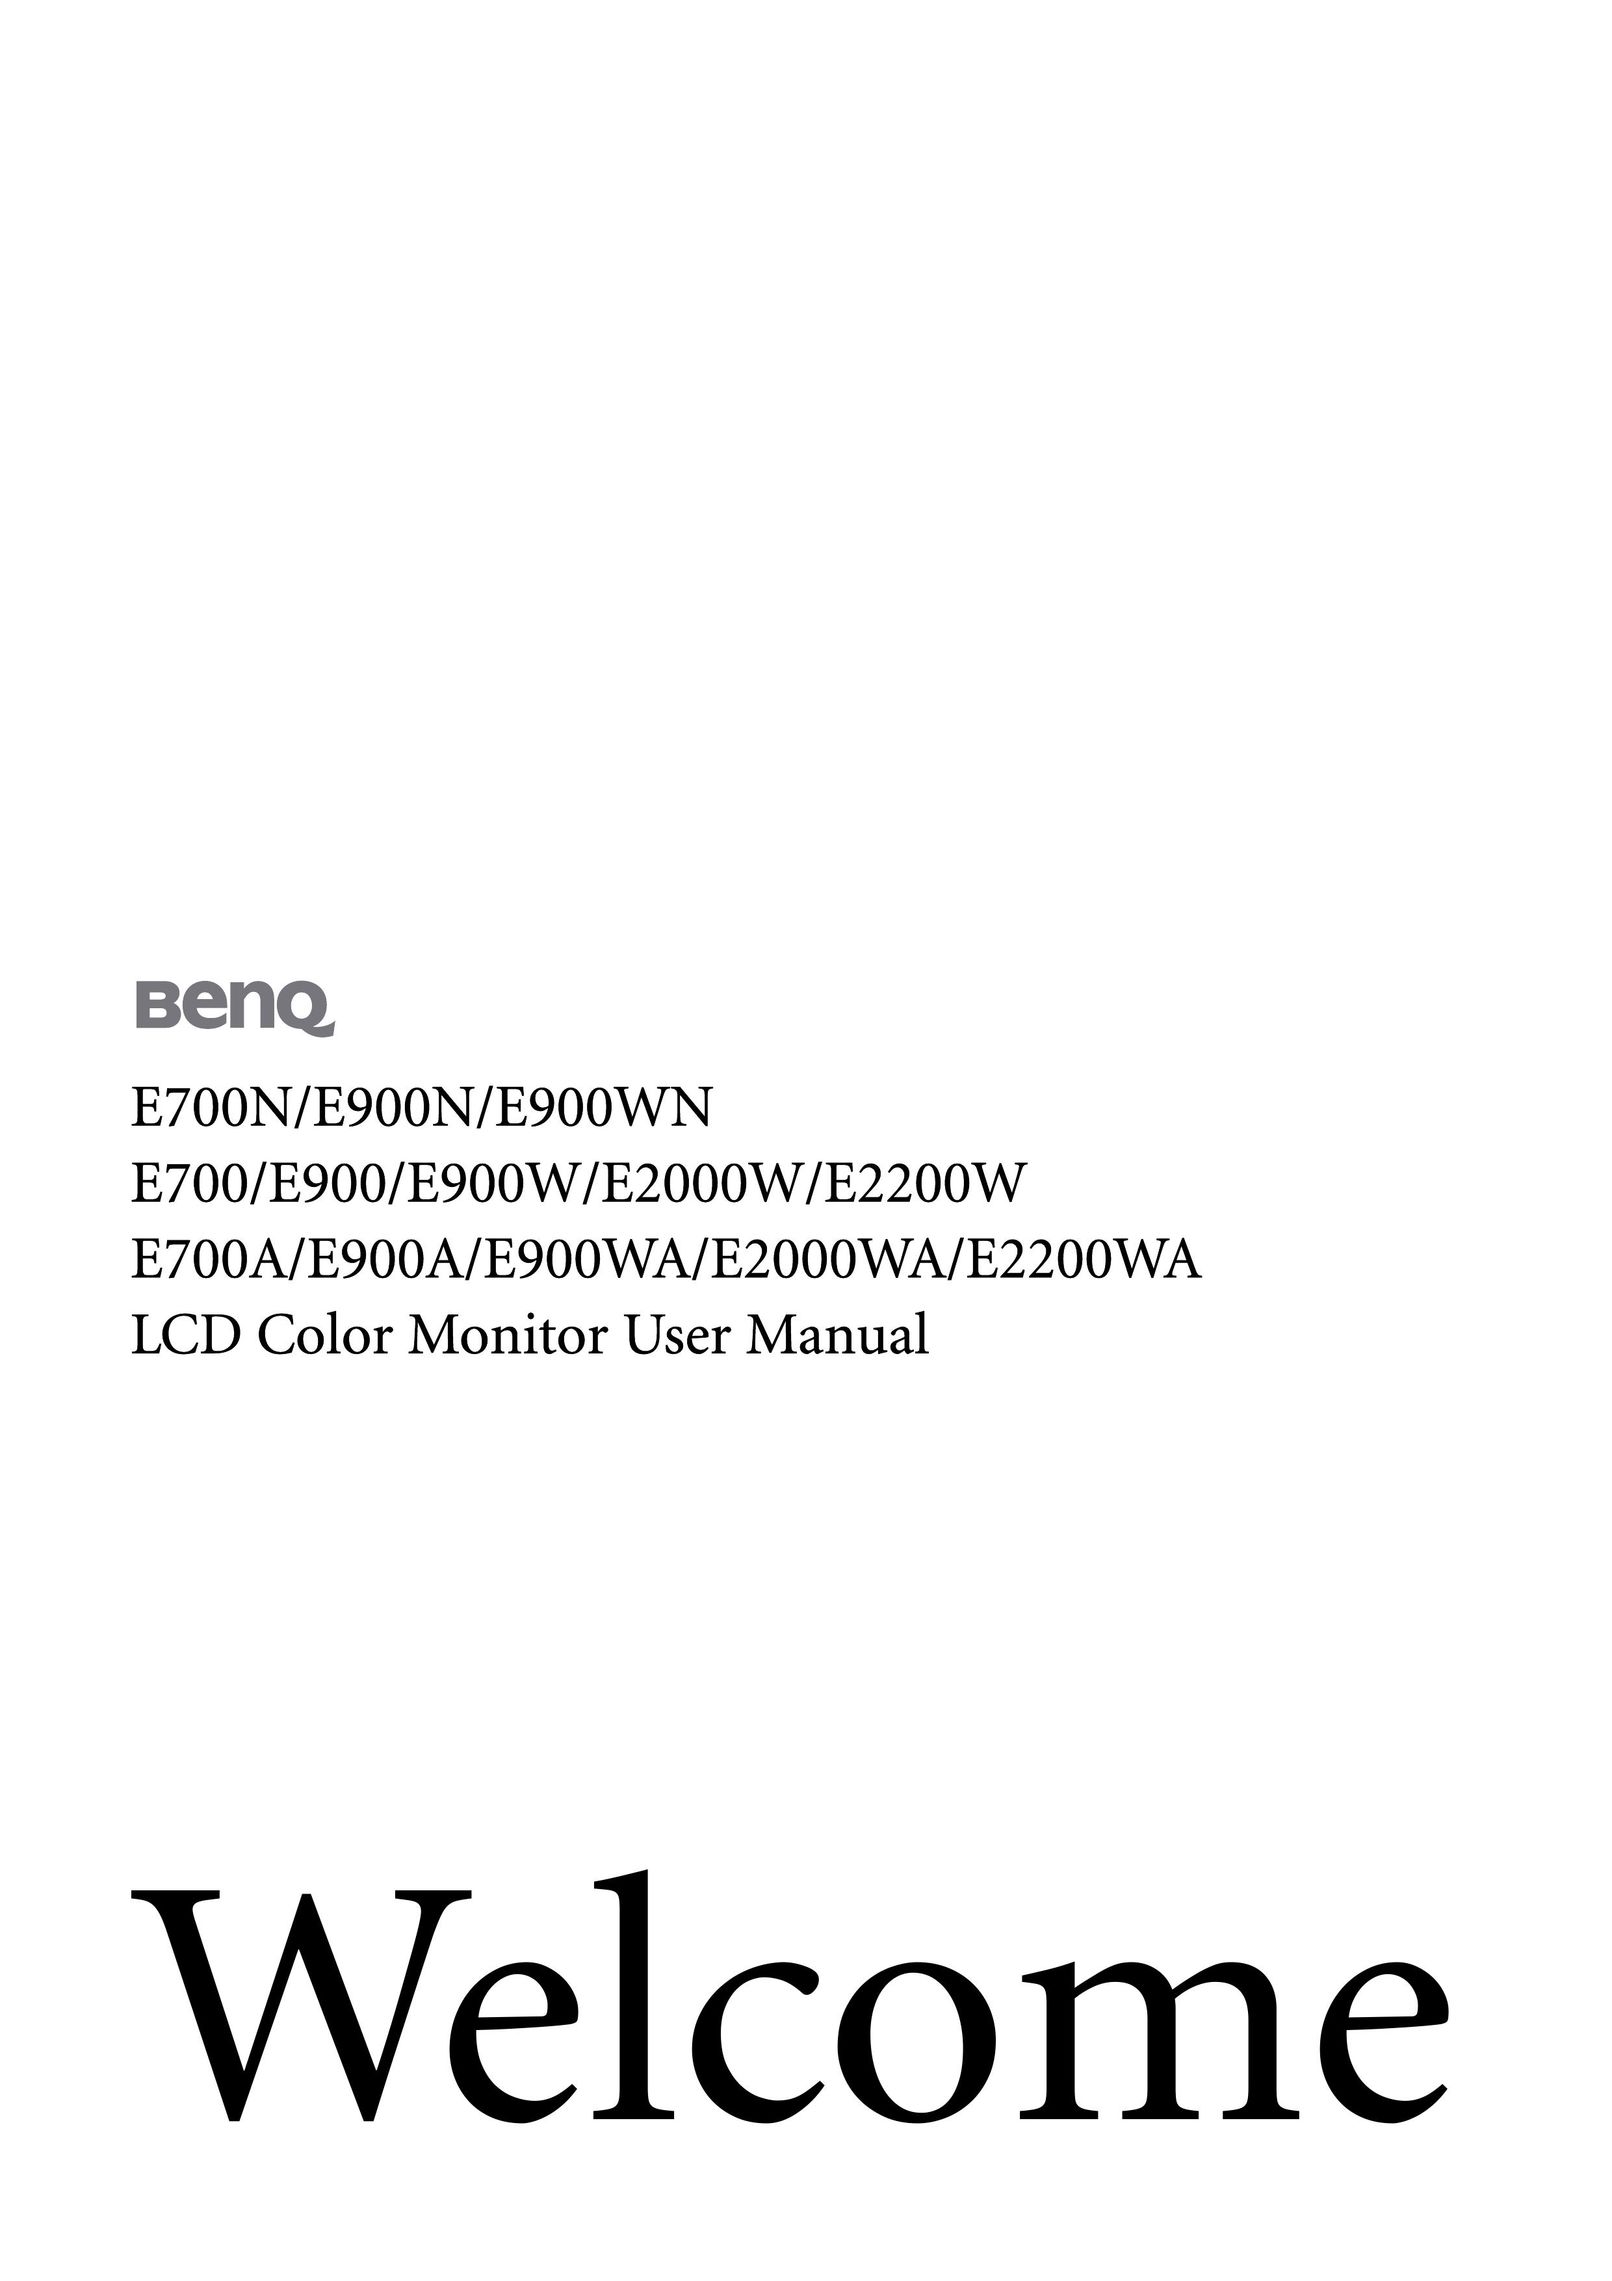 BenQ E900 Computer Monitor User Manual